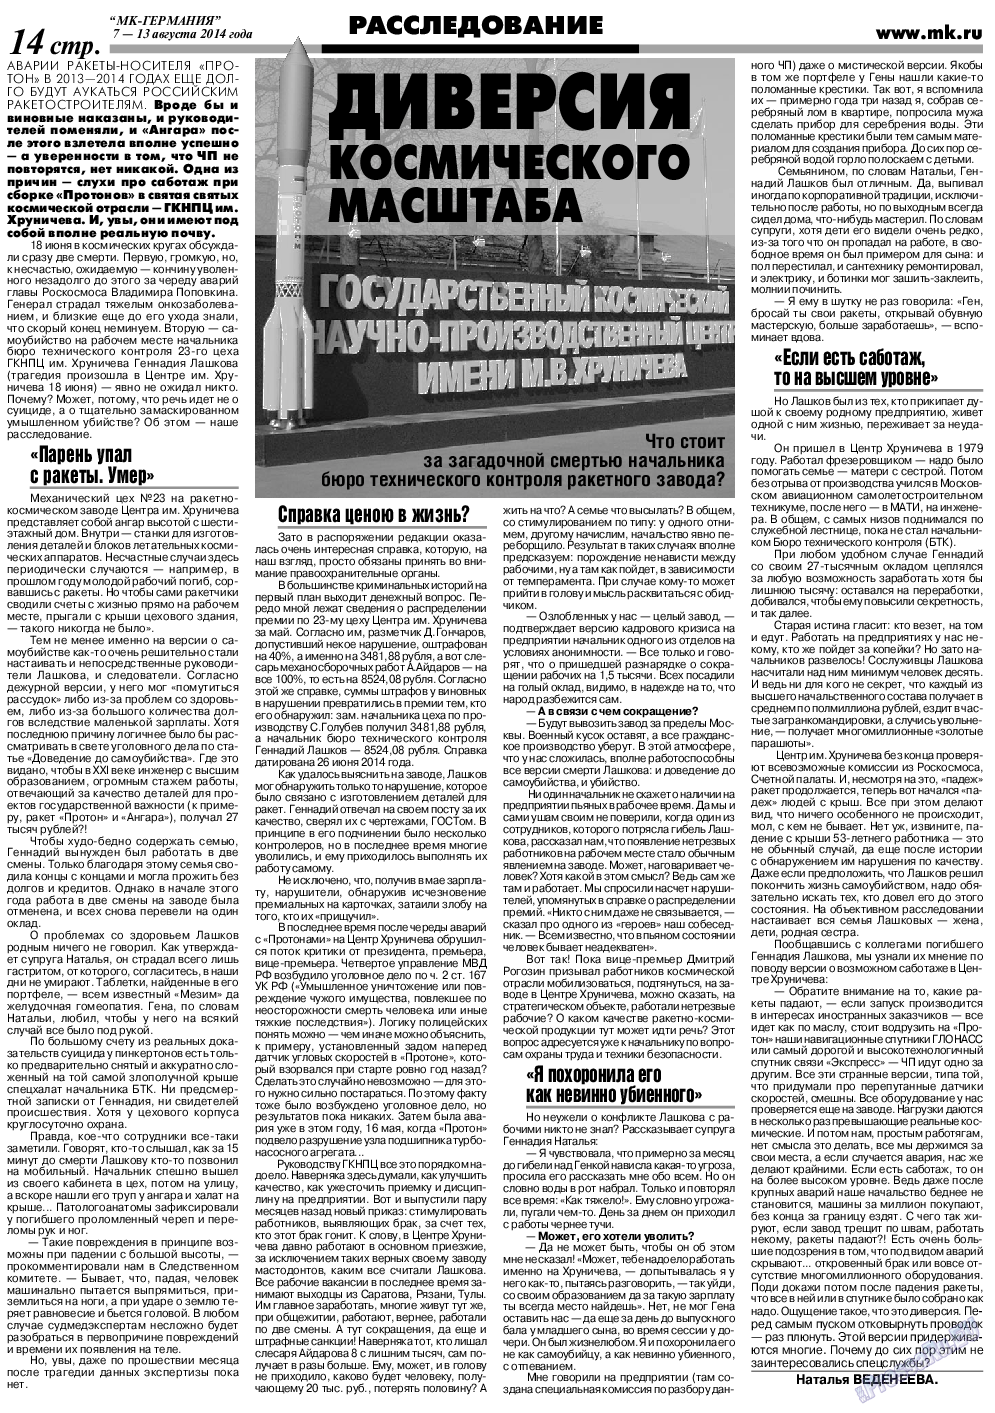 МК-Германия, газета. 2014 №32 стр.14